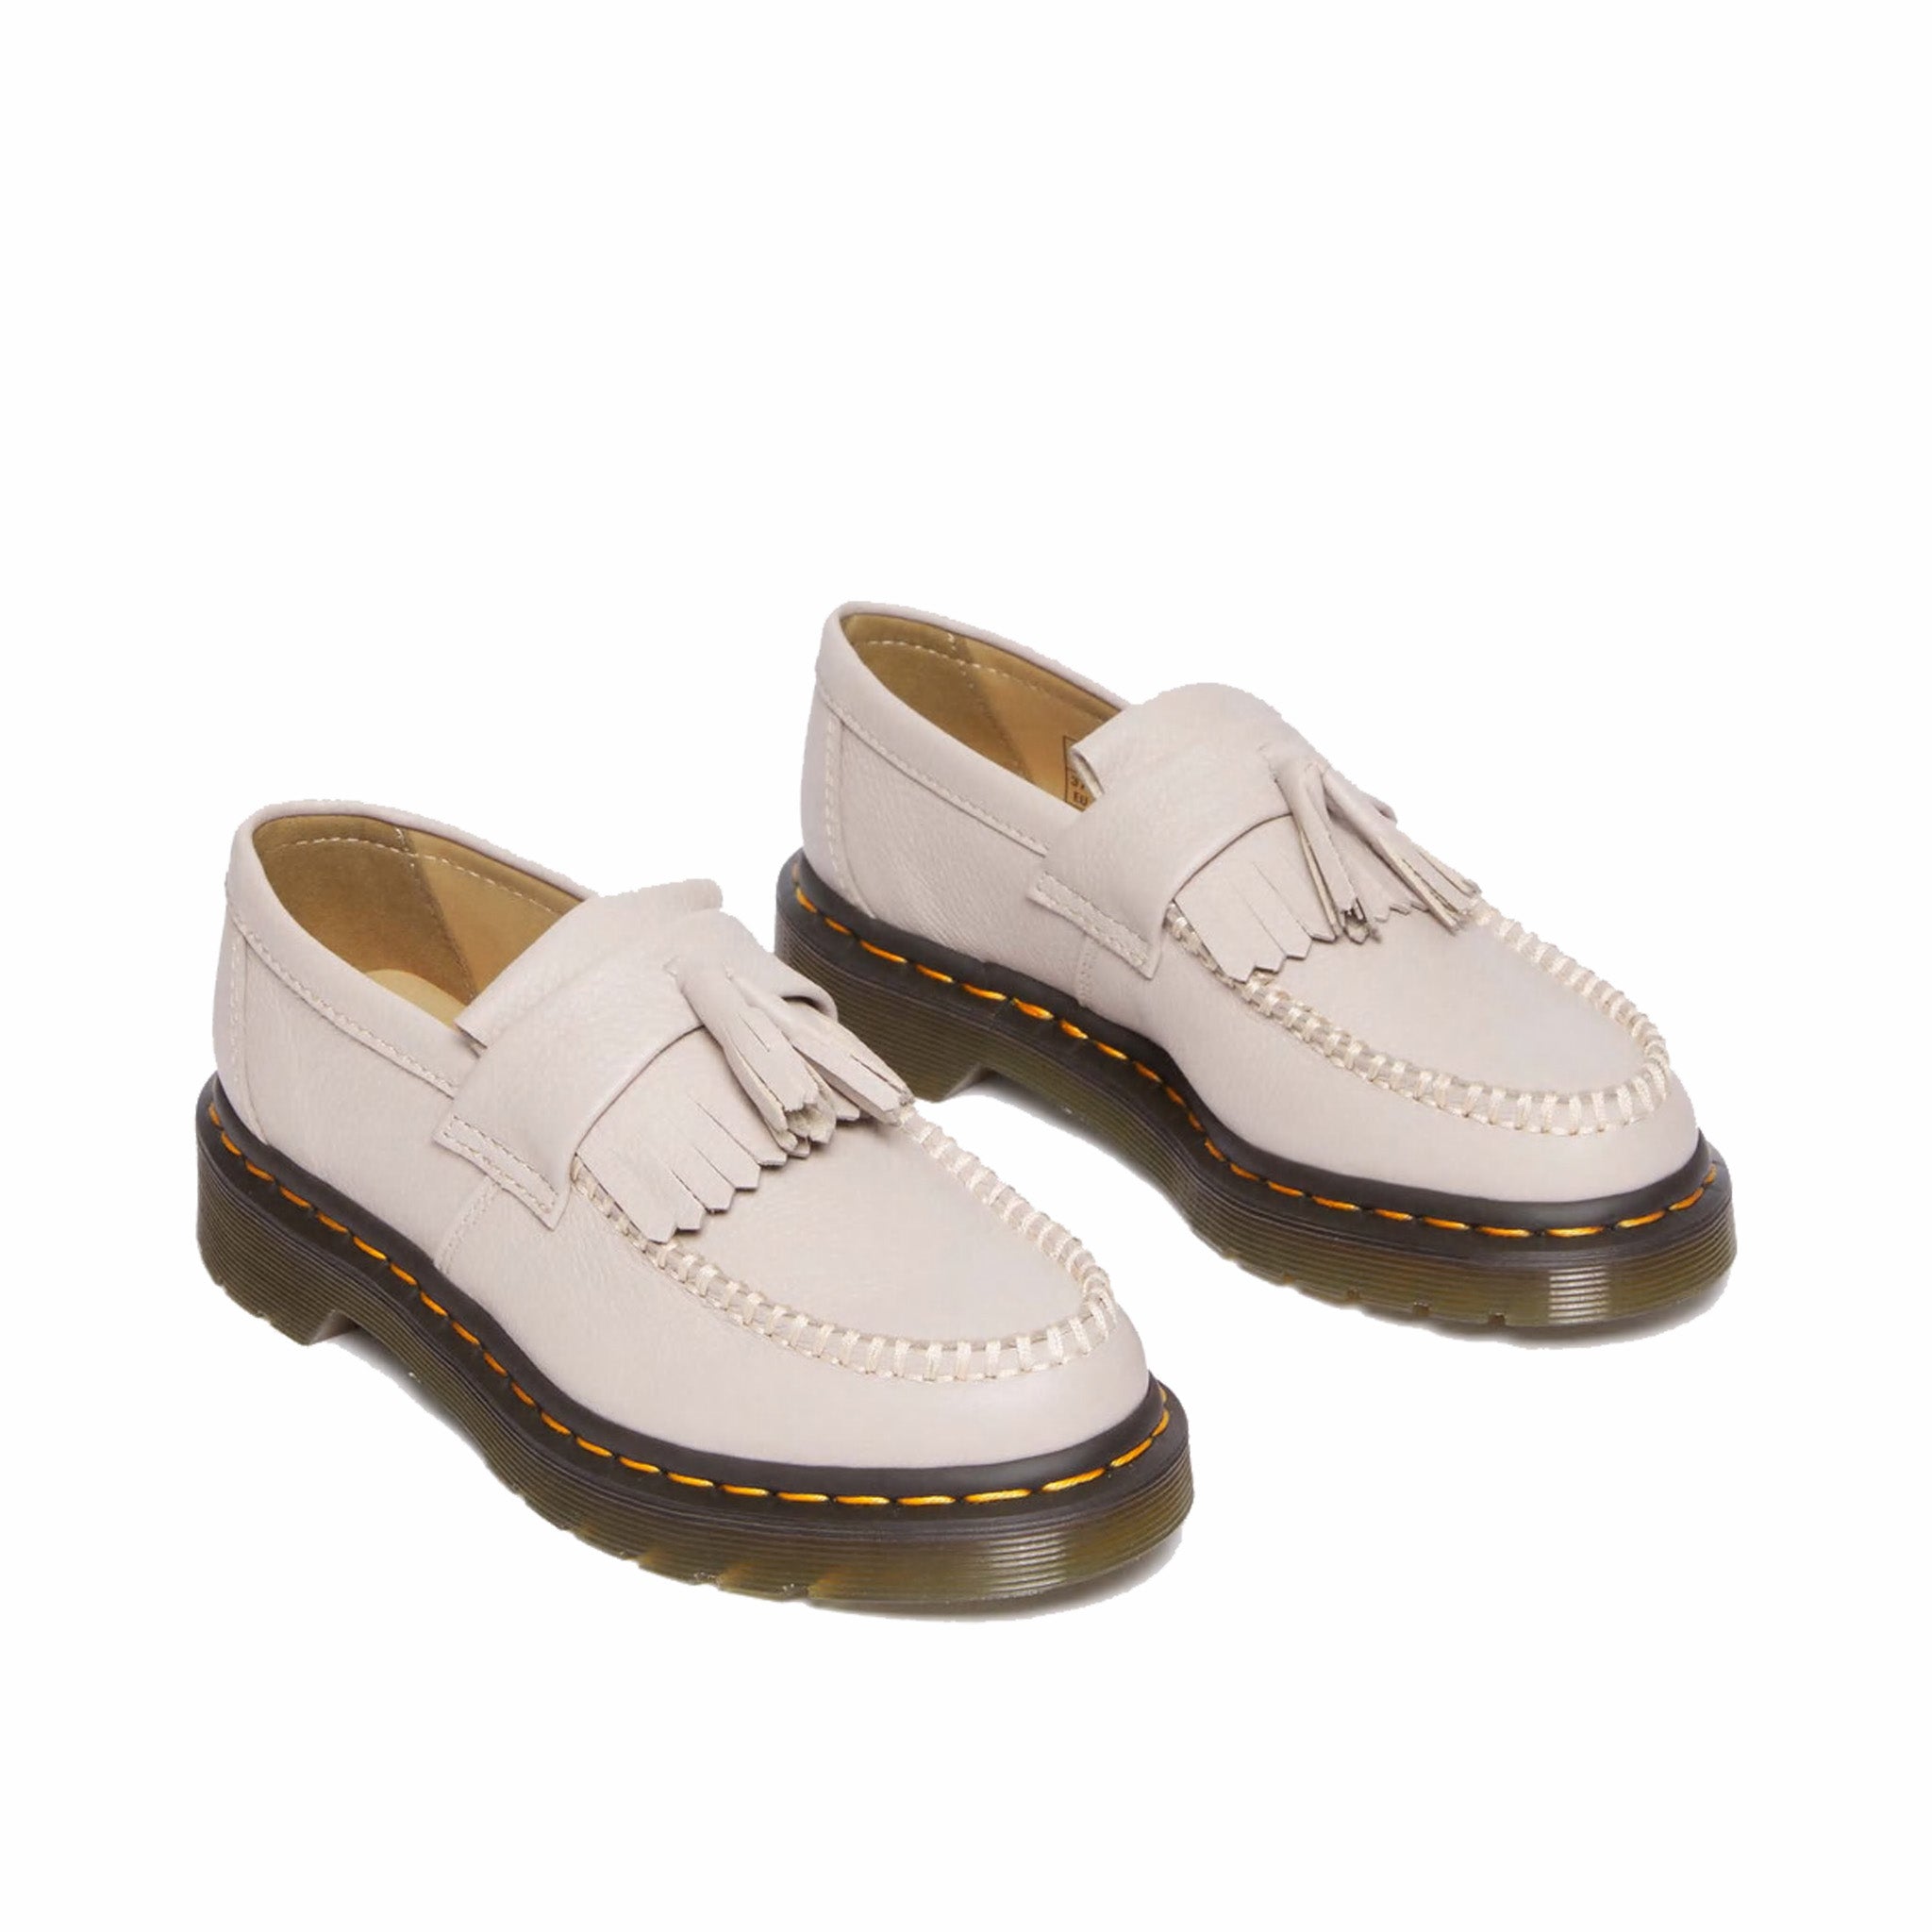 Dr. Martens Adrian Virginia Leather Tassel Loafers (Vintage Taupe/Virginia) - August Shop